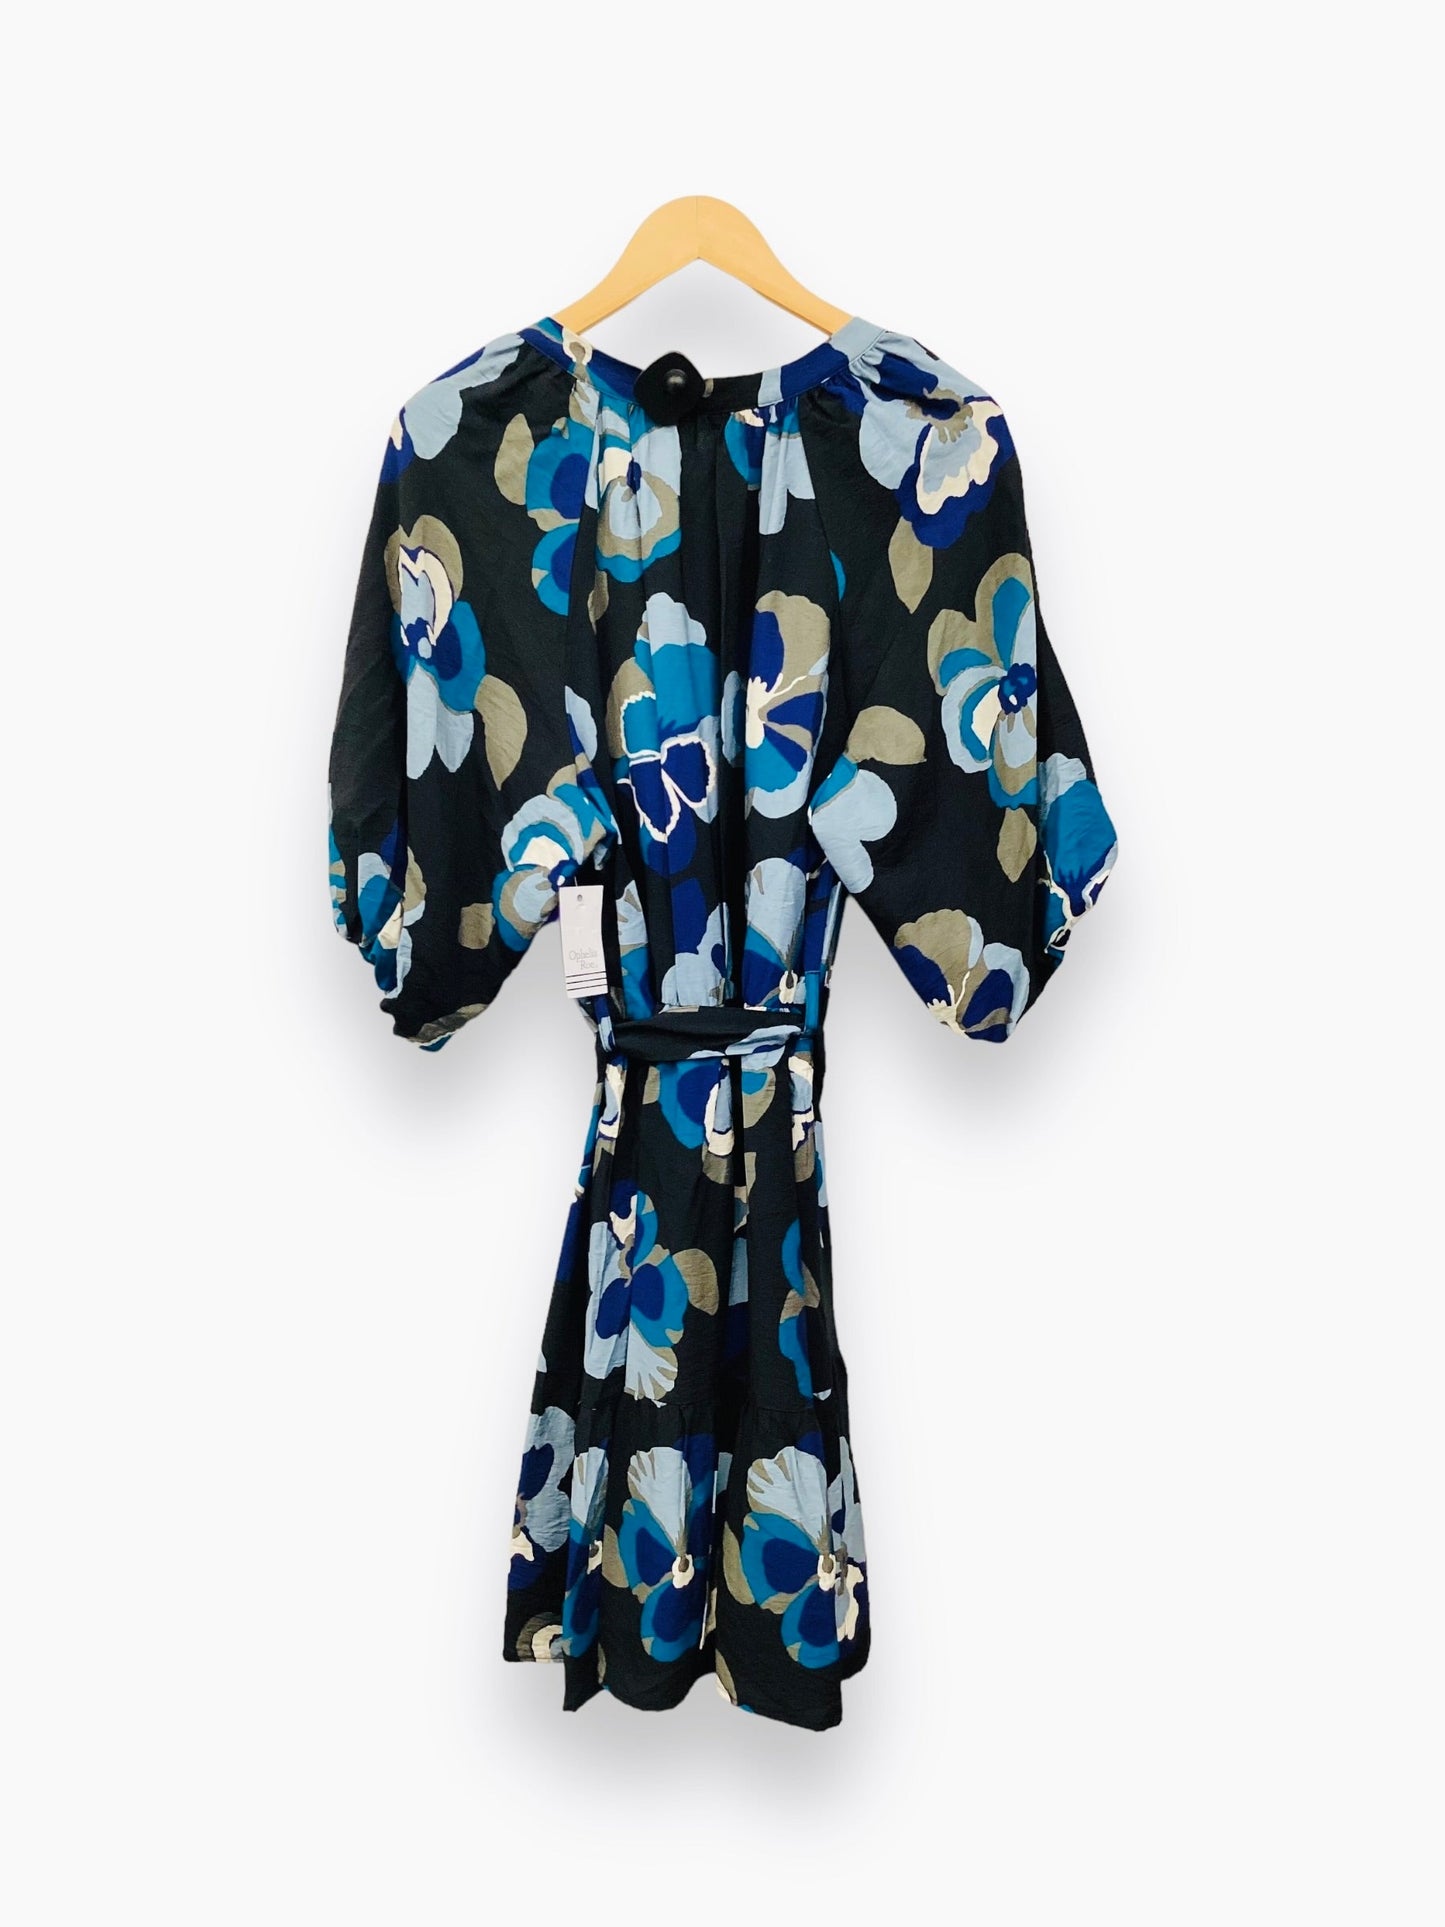 NWT Black & Blue Dress Casual Midi Ophelia Roe, Size 1x